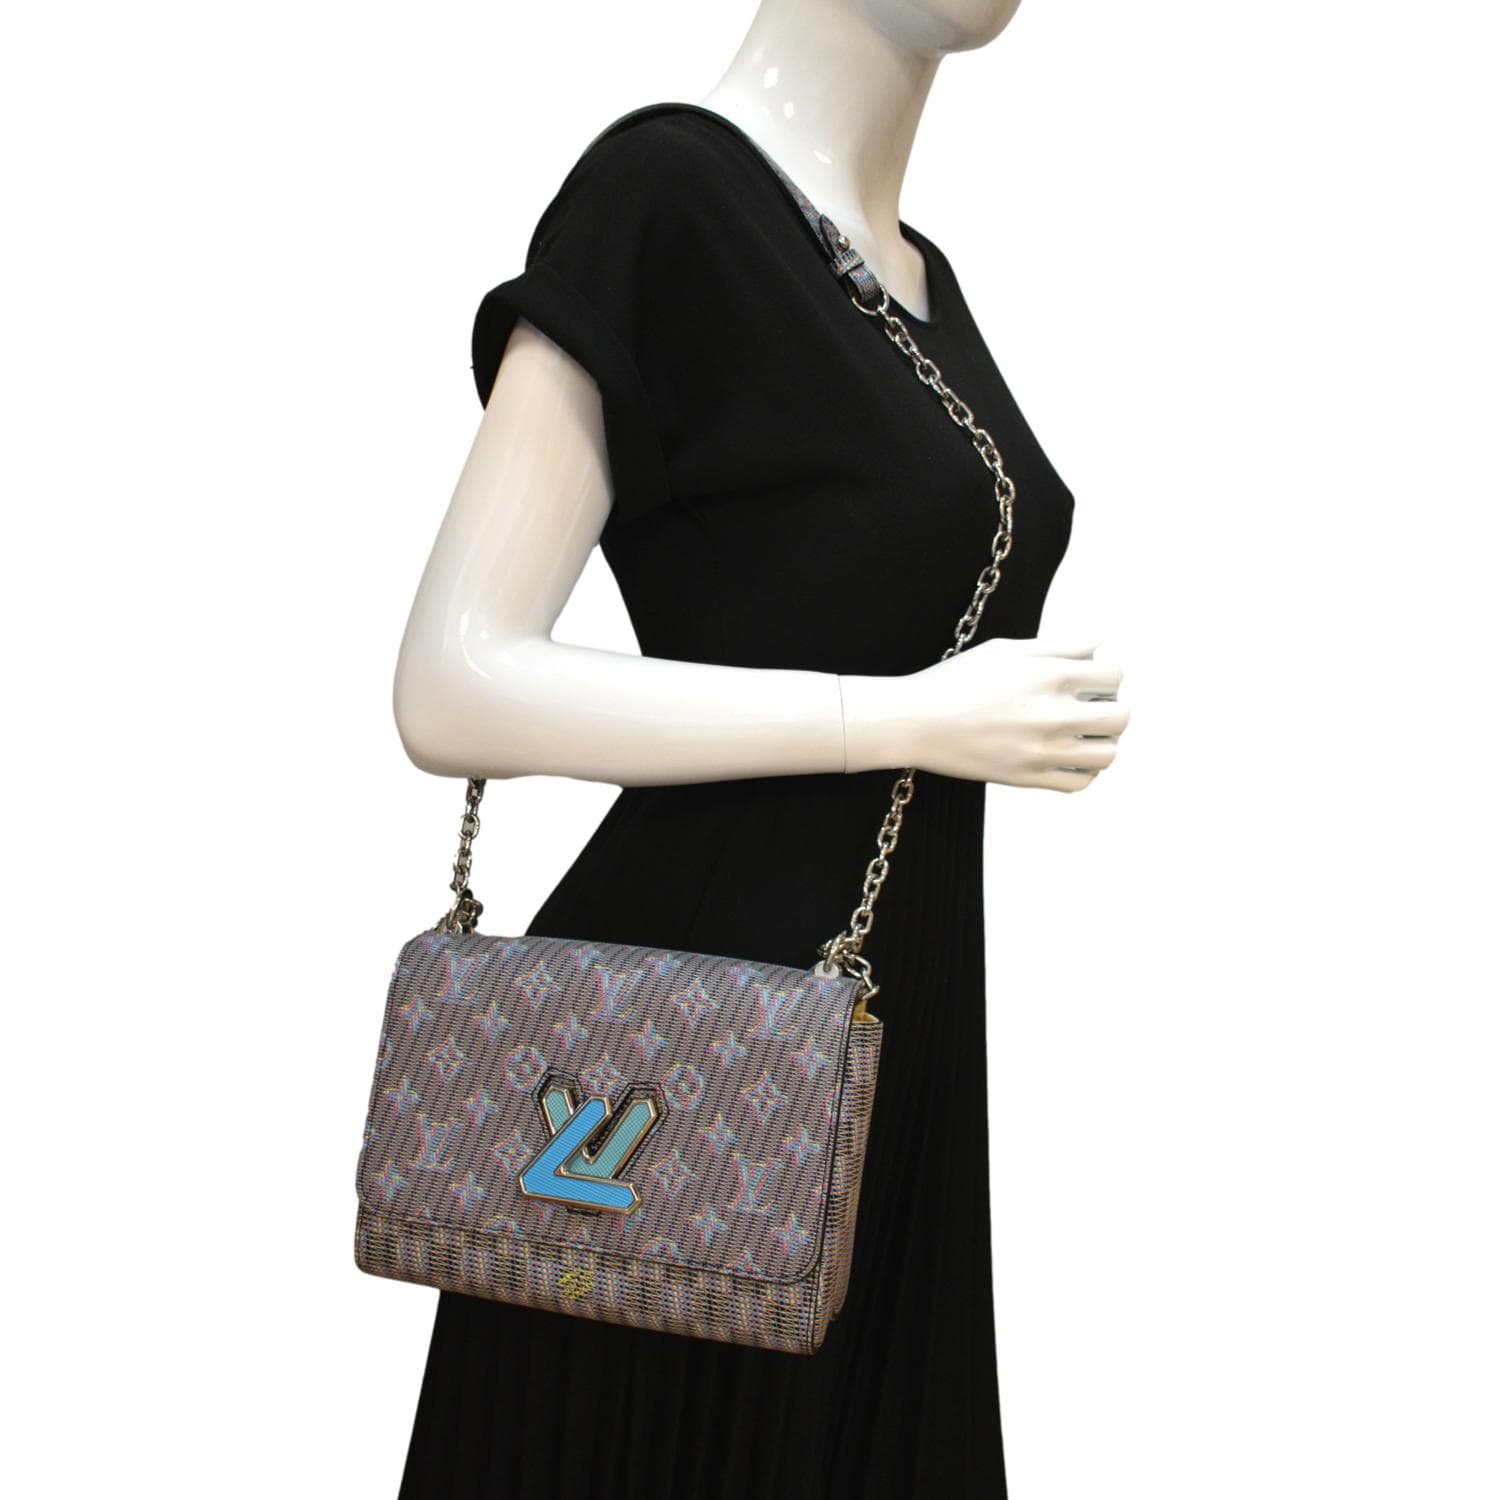 Louis Vuitton, Bags, New Louis Vuitton Twist Blue Handbag